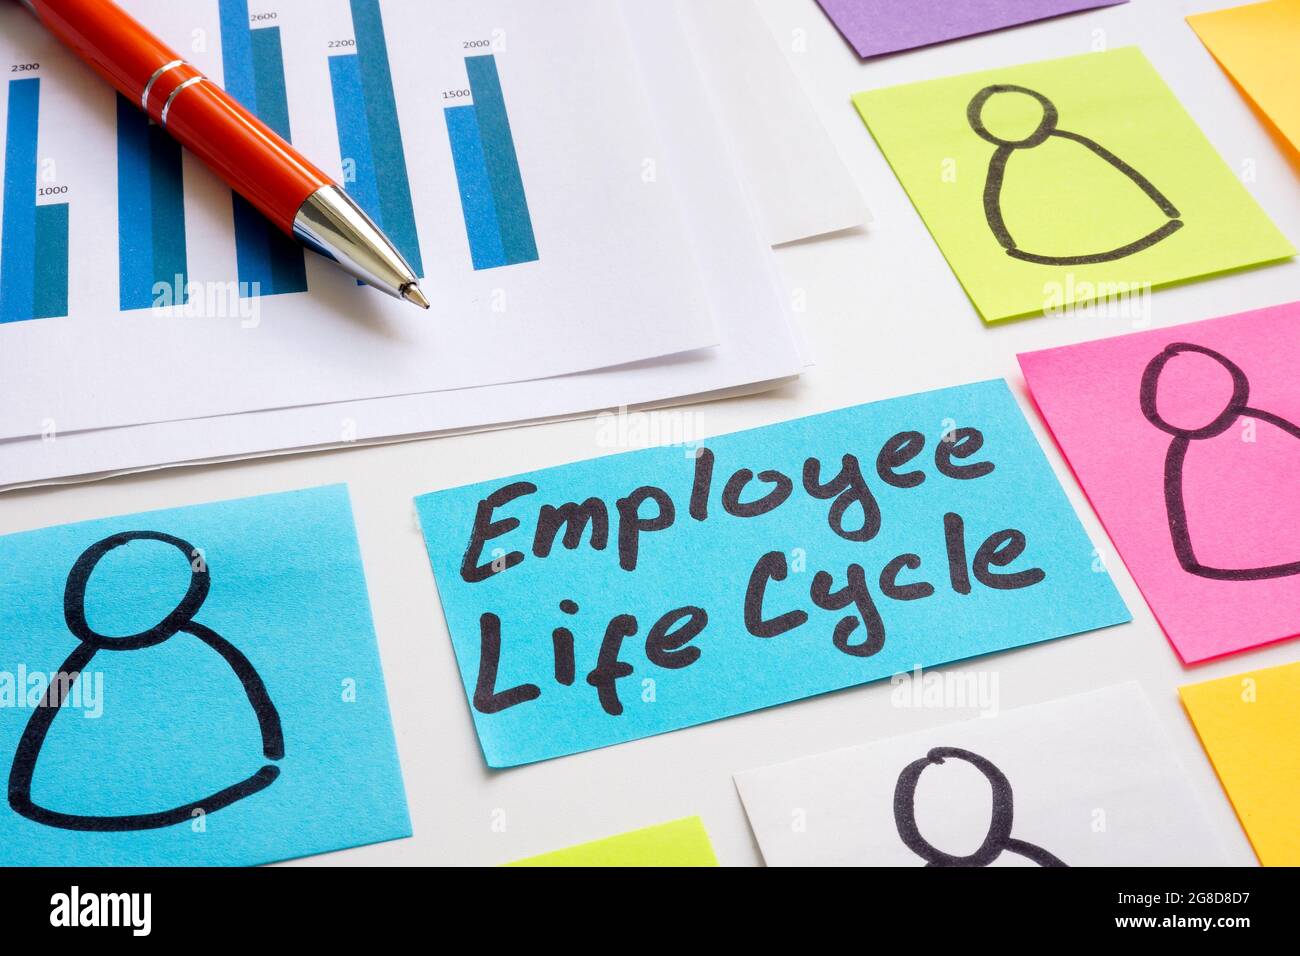 Employee life cycle phrase on the sticker. Stock Photo